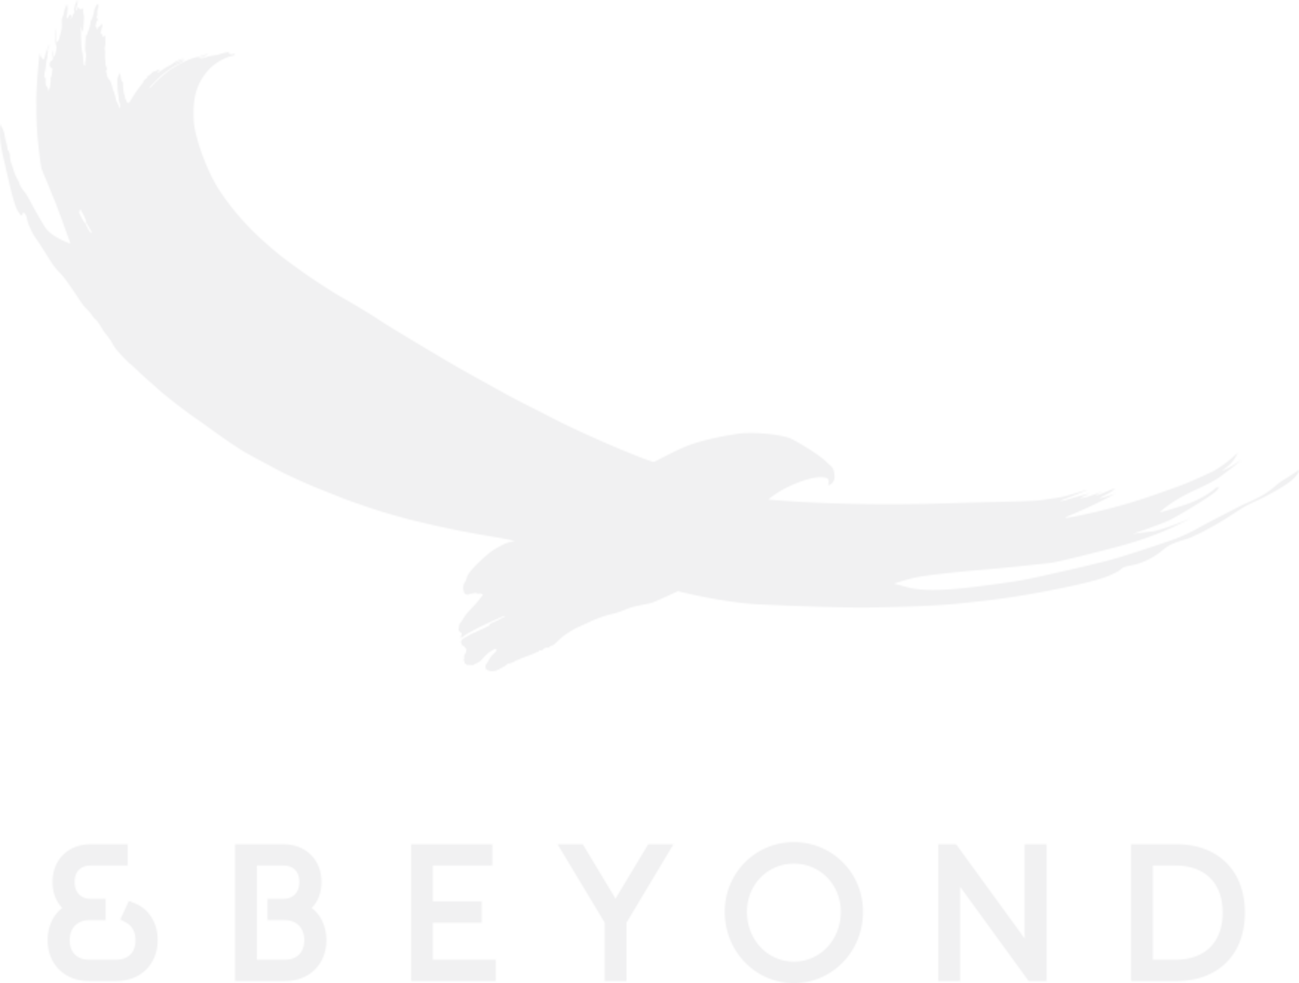 AndBeyond Logo